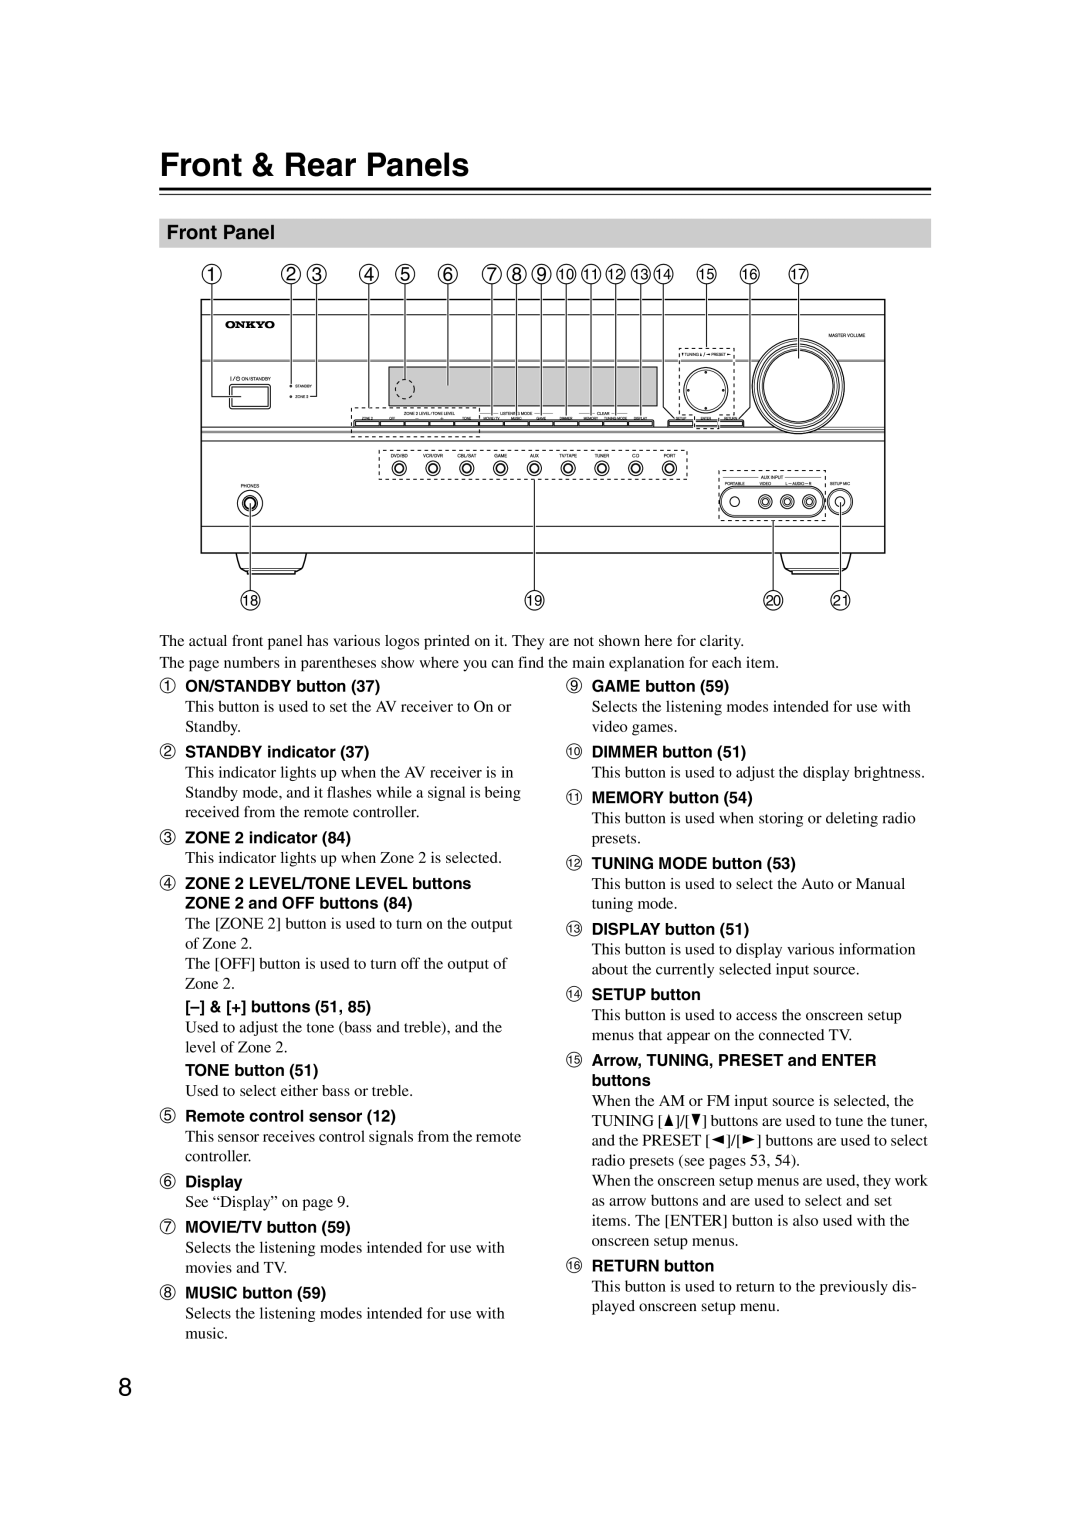 Onkyo HT-RC160 instruction manual Front & Rear Panels, a b c d e f ghijklmn o p q, Front Panel 